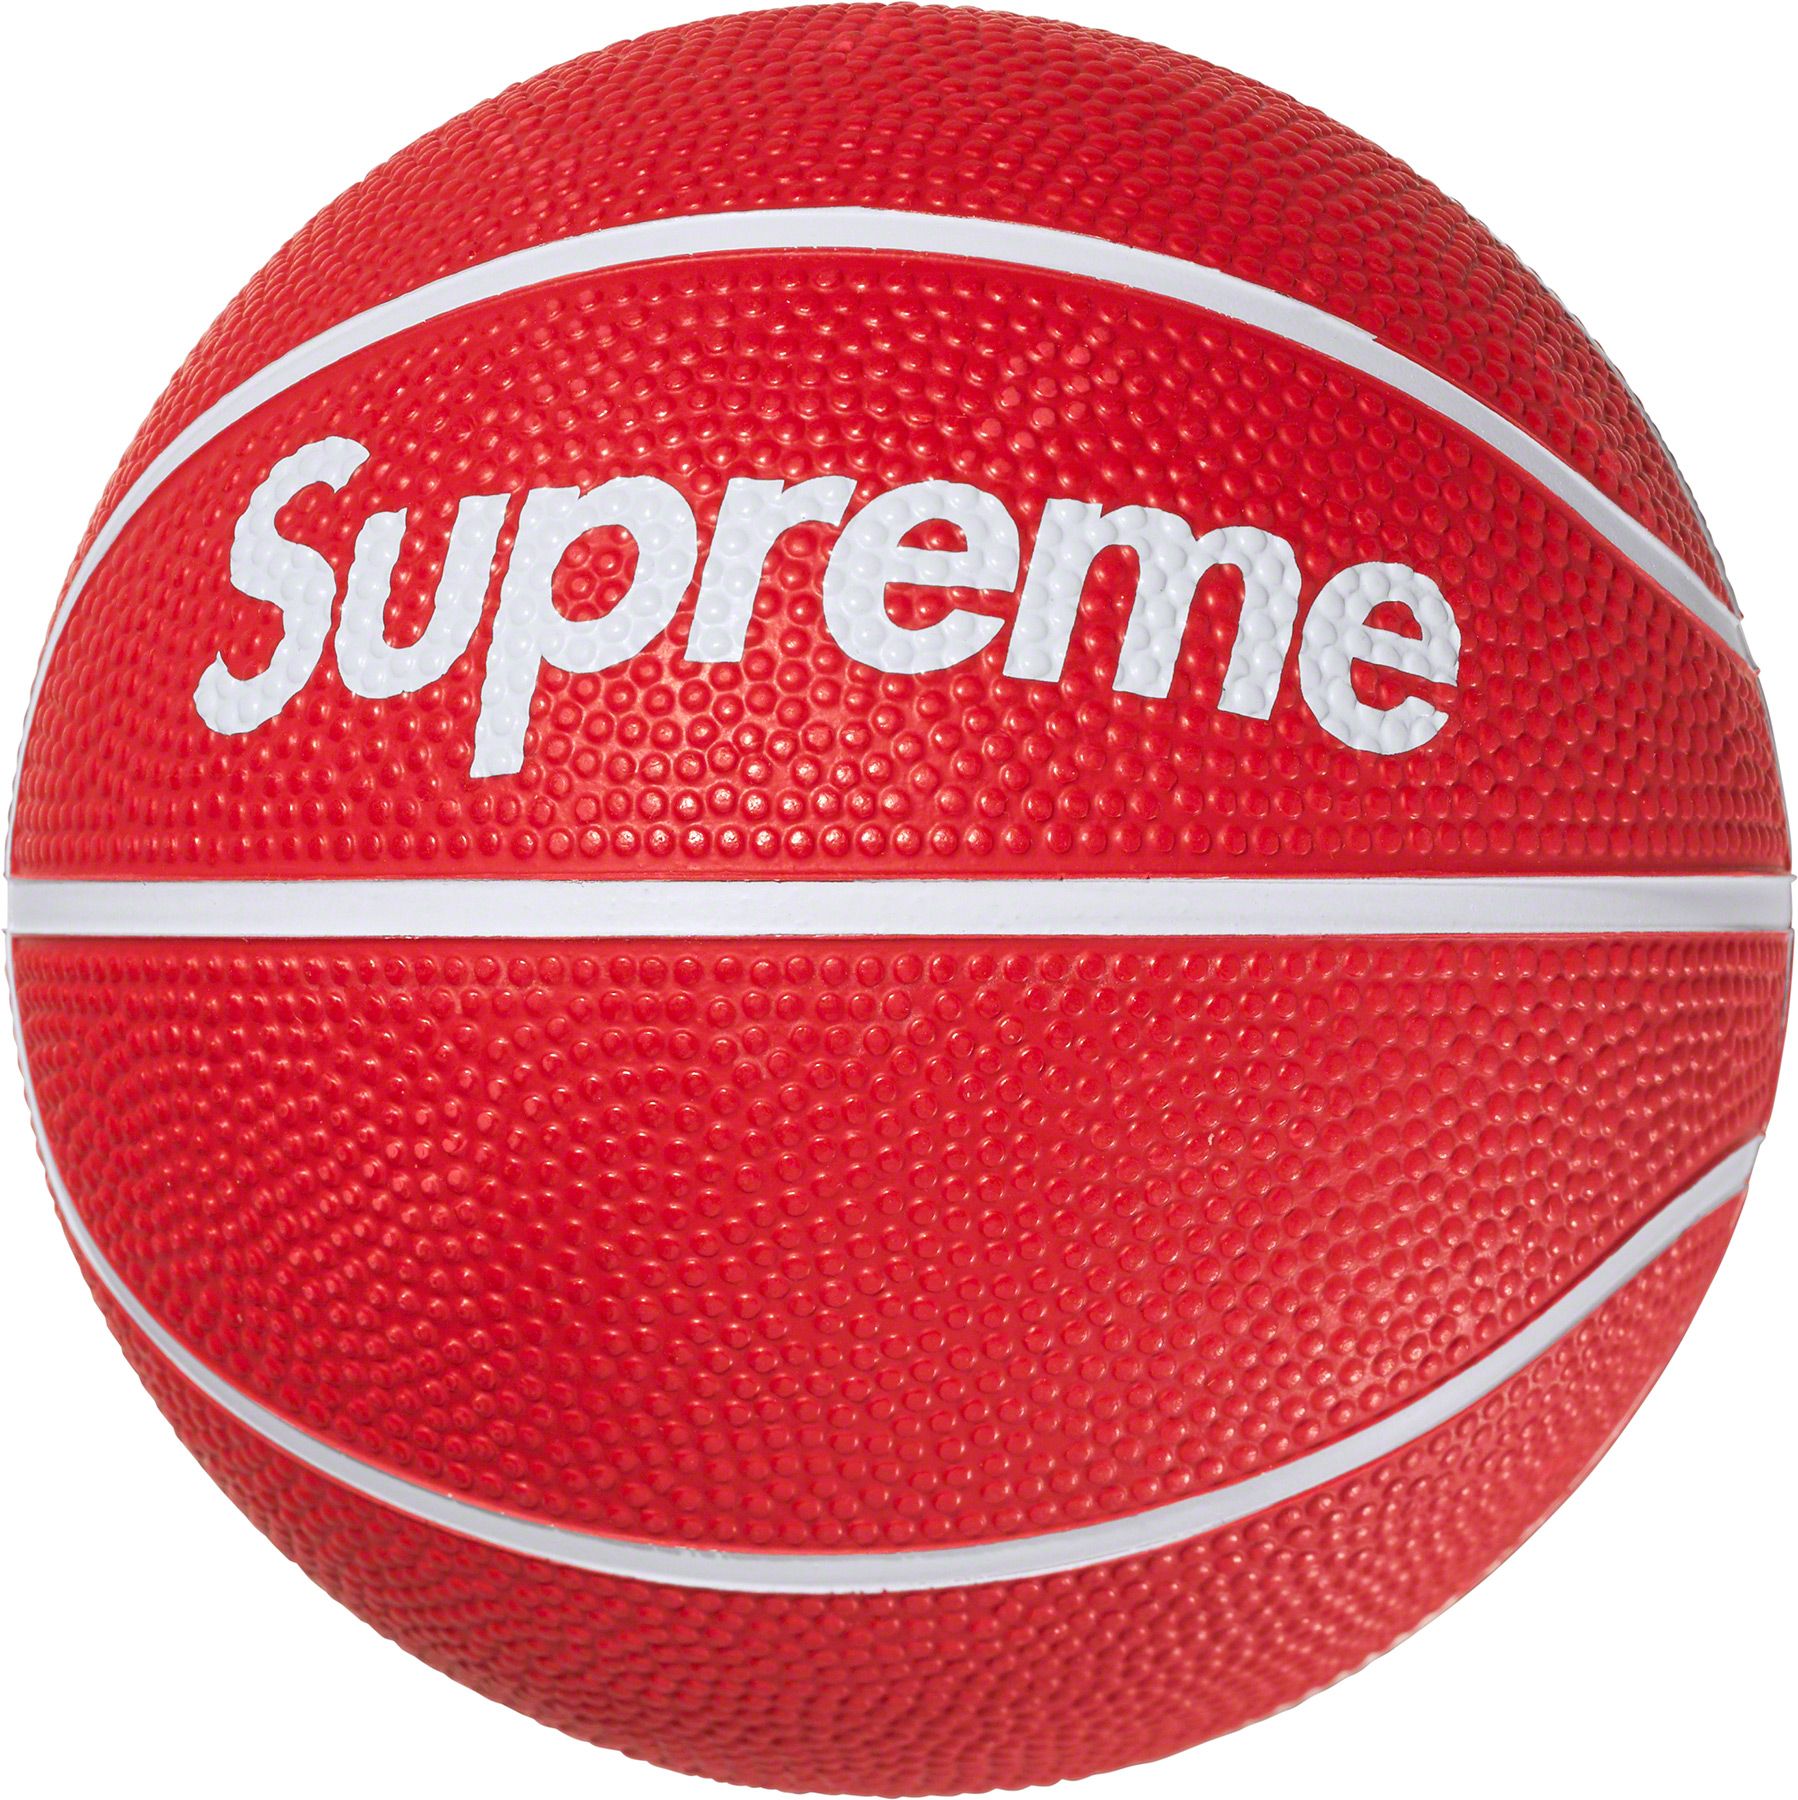 Supreme x Spalding Basketball Priced at $25K USD